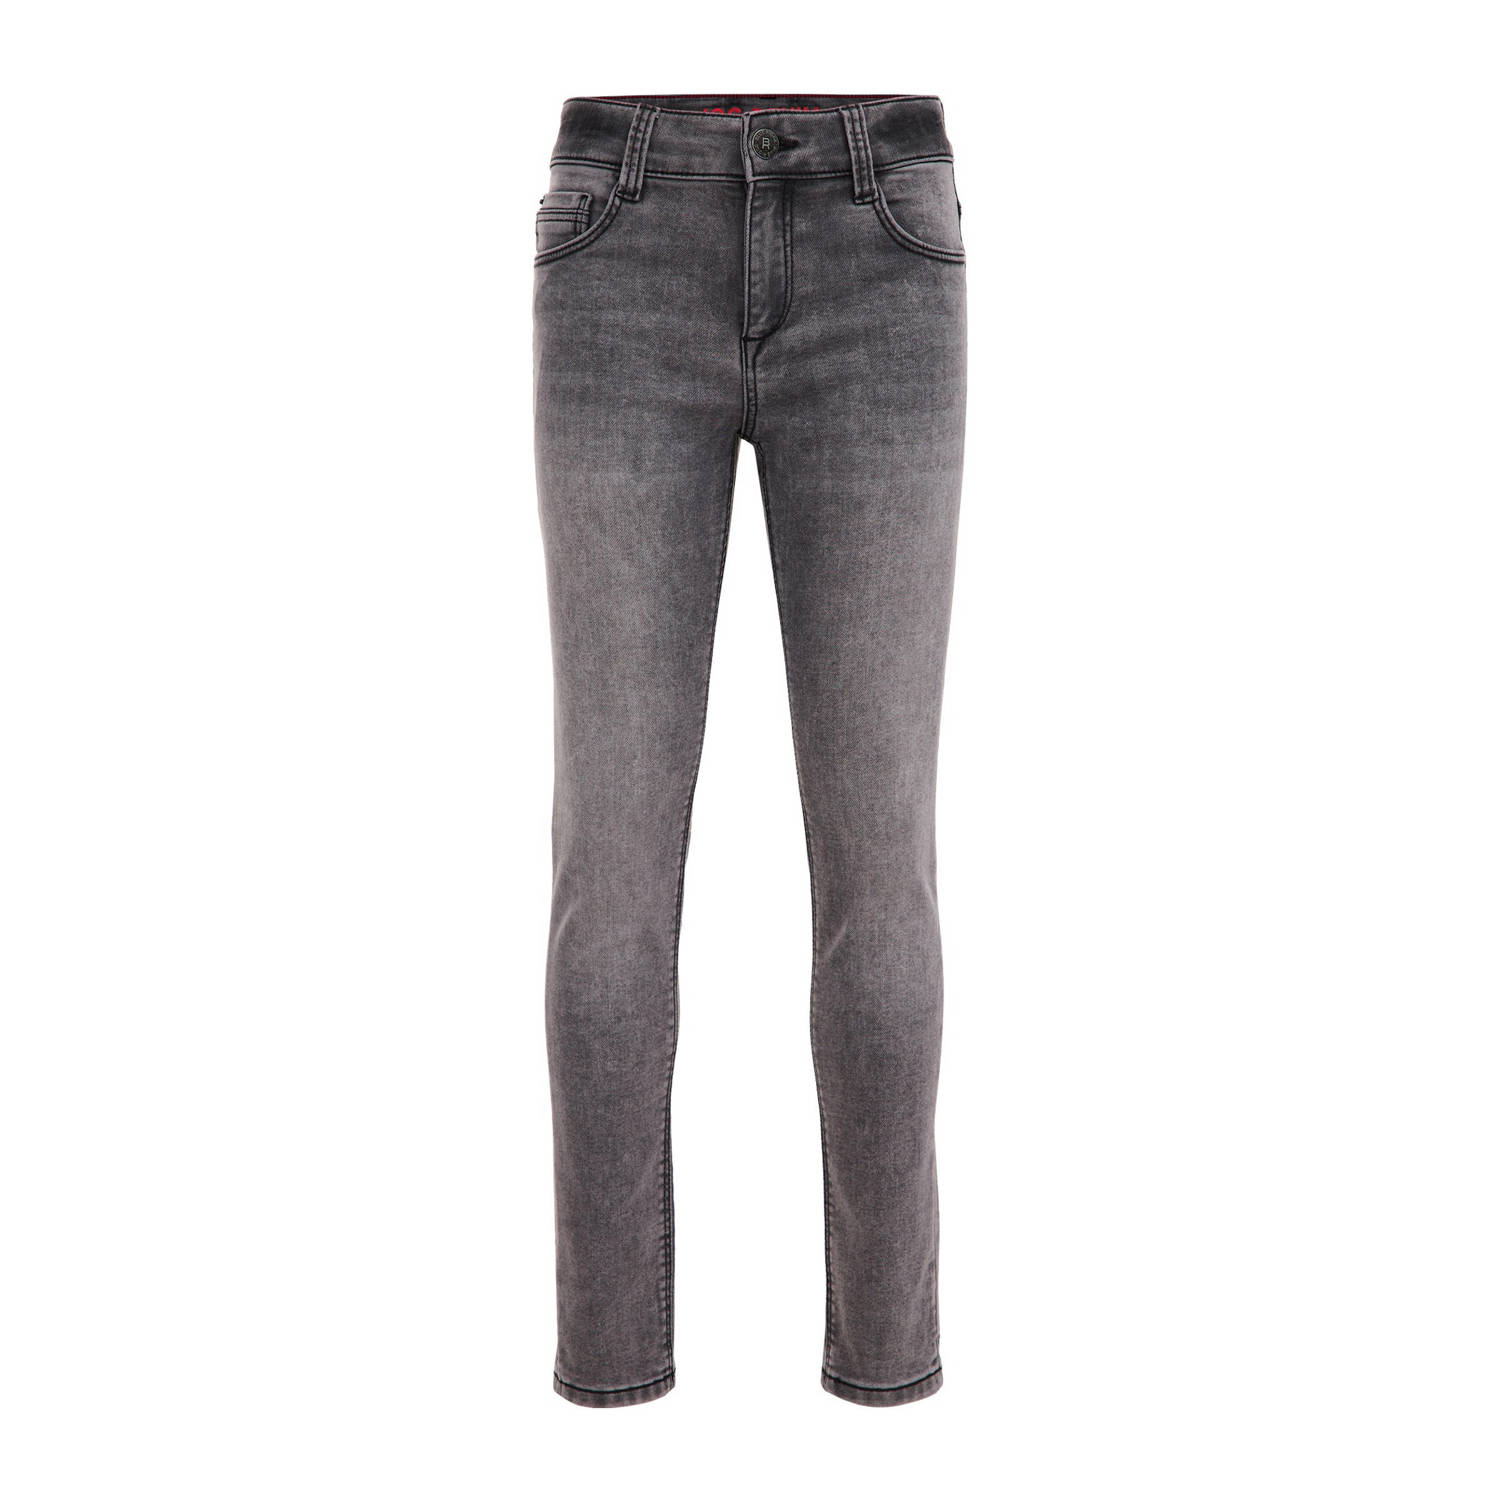 WE Fashion Blue Ridge slim fit jeans soft grey denim Grijs Jongens Stretchdenim 110